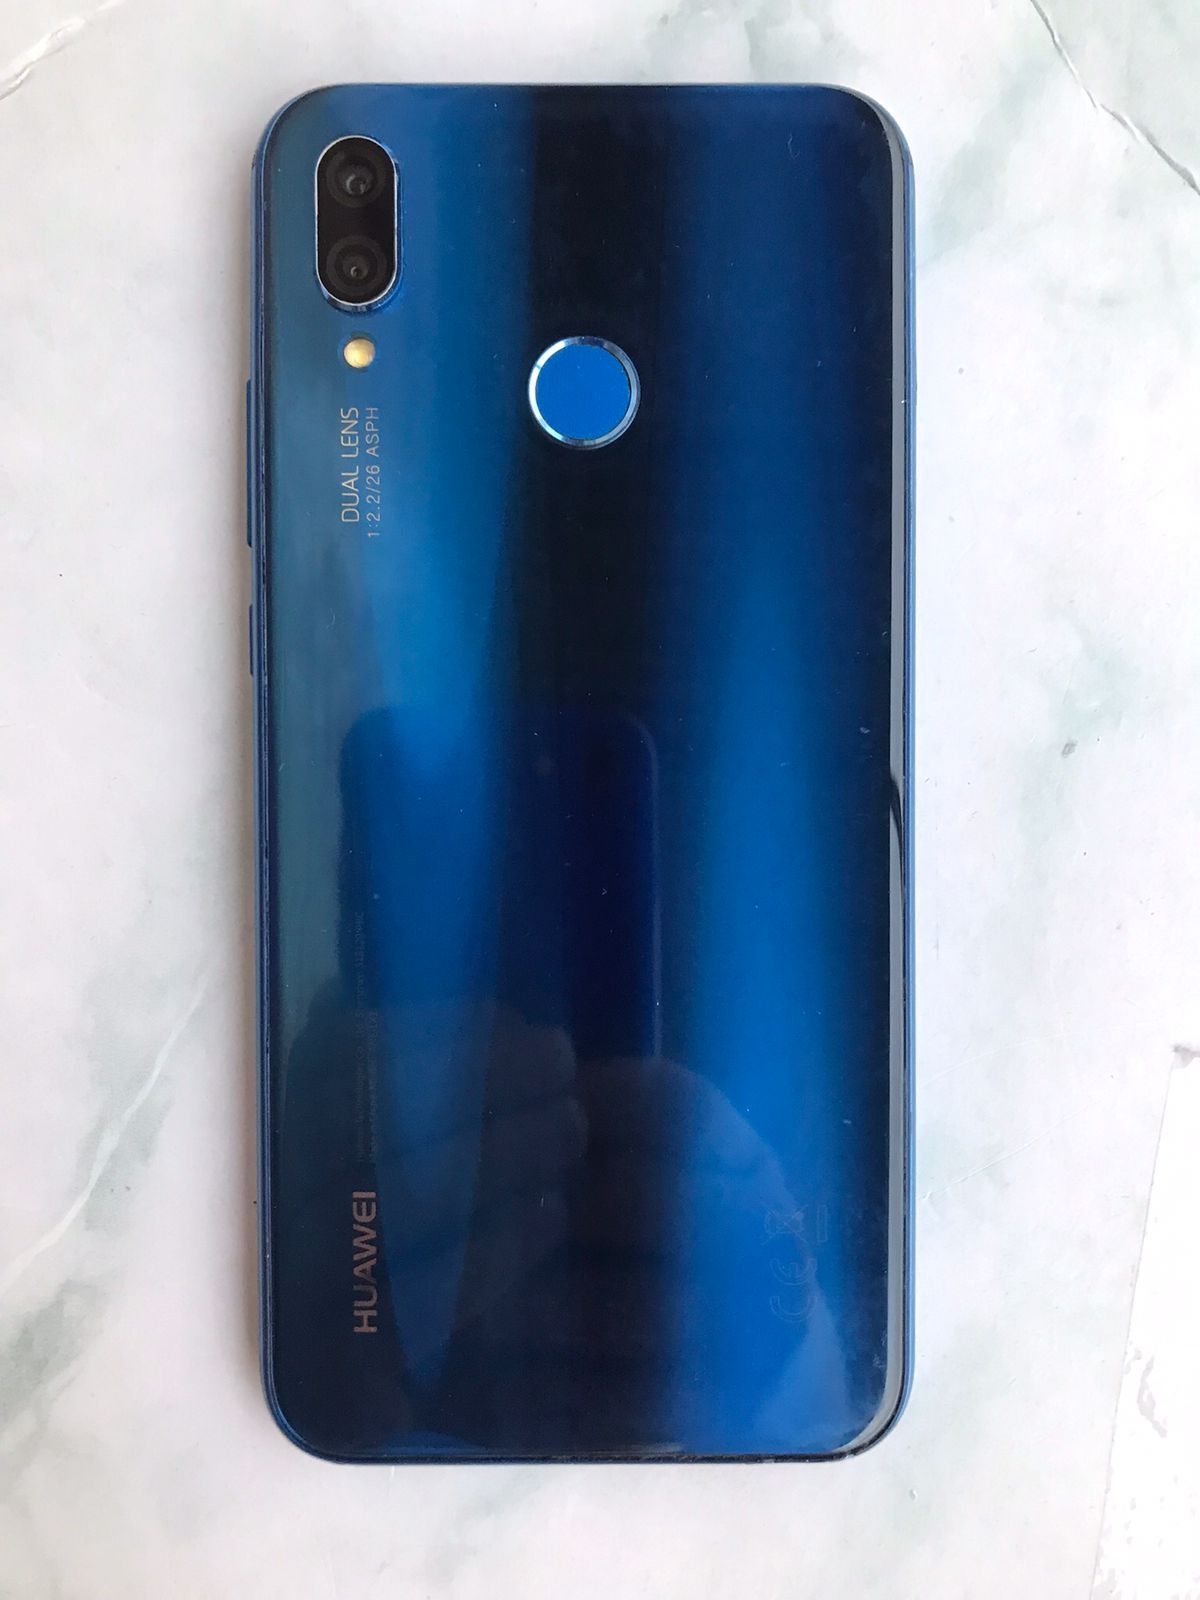 Huawei y6 2018 состояние из 10/8 батарея держит хорошо.